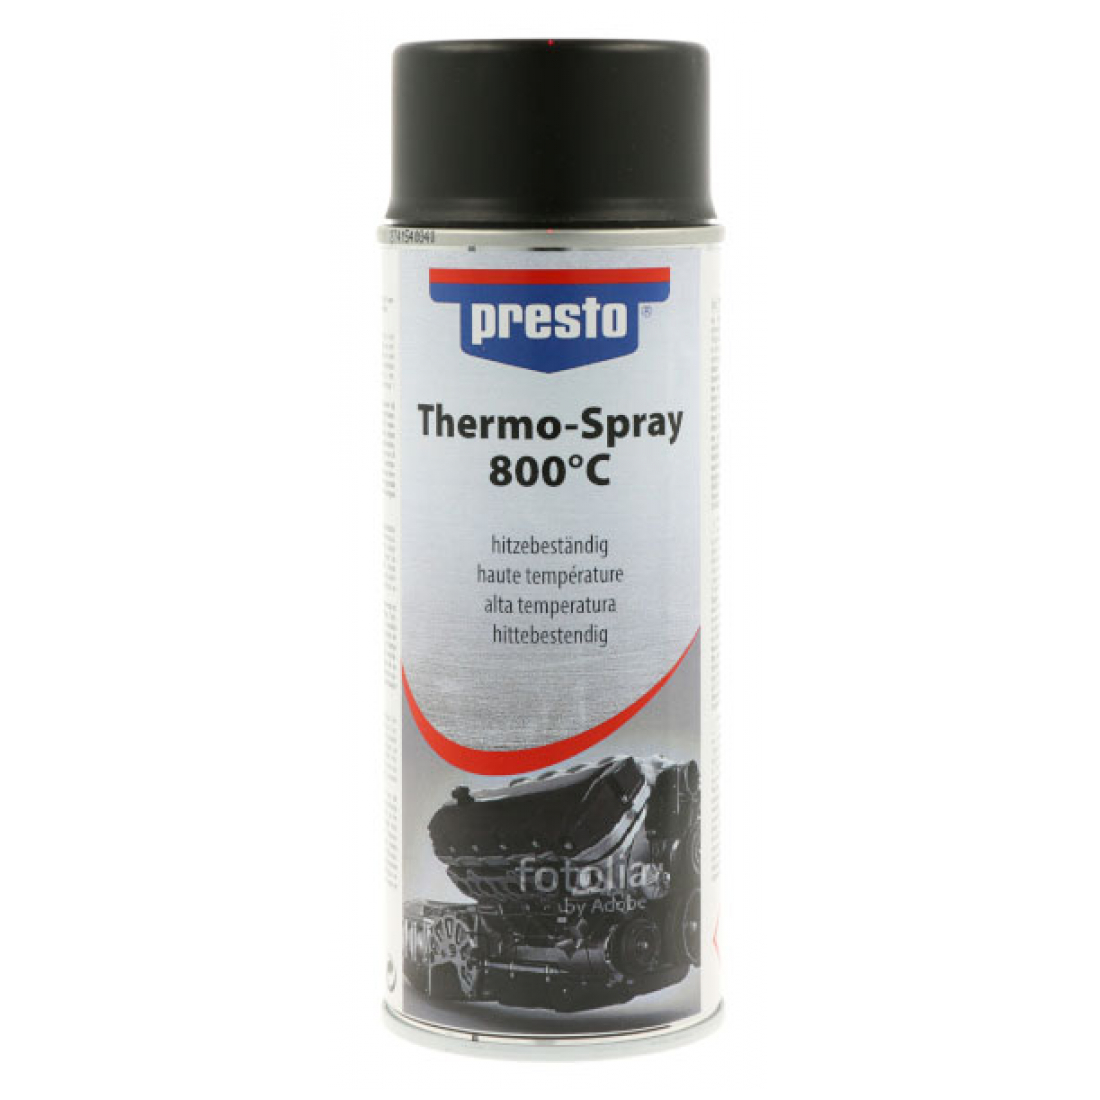 presto Thermo-Spray schwarz 800°C 400ml 428726